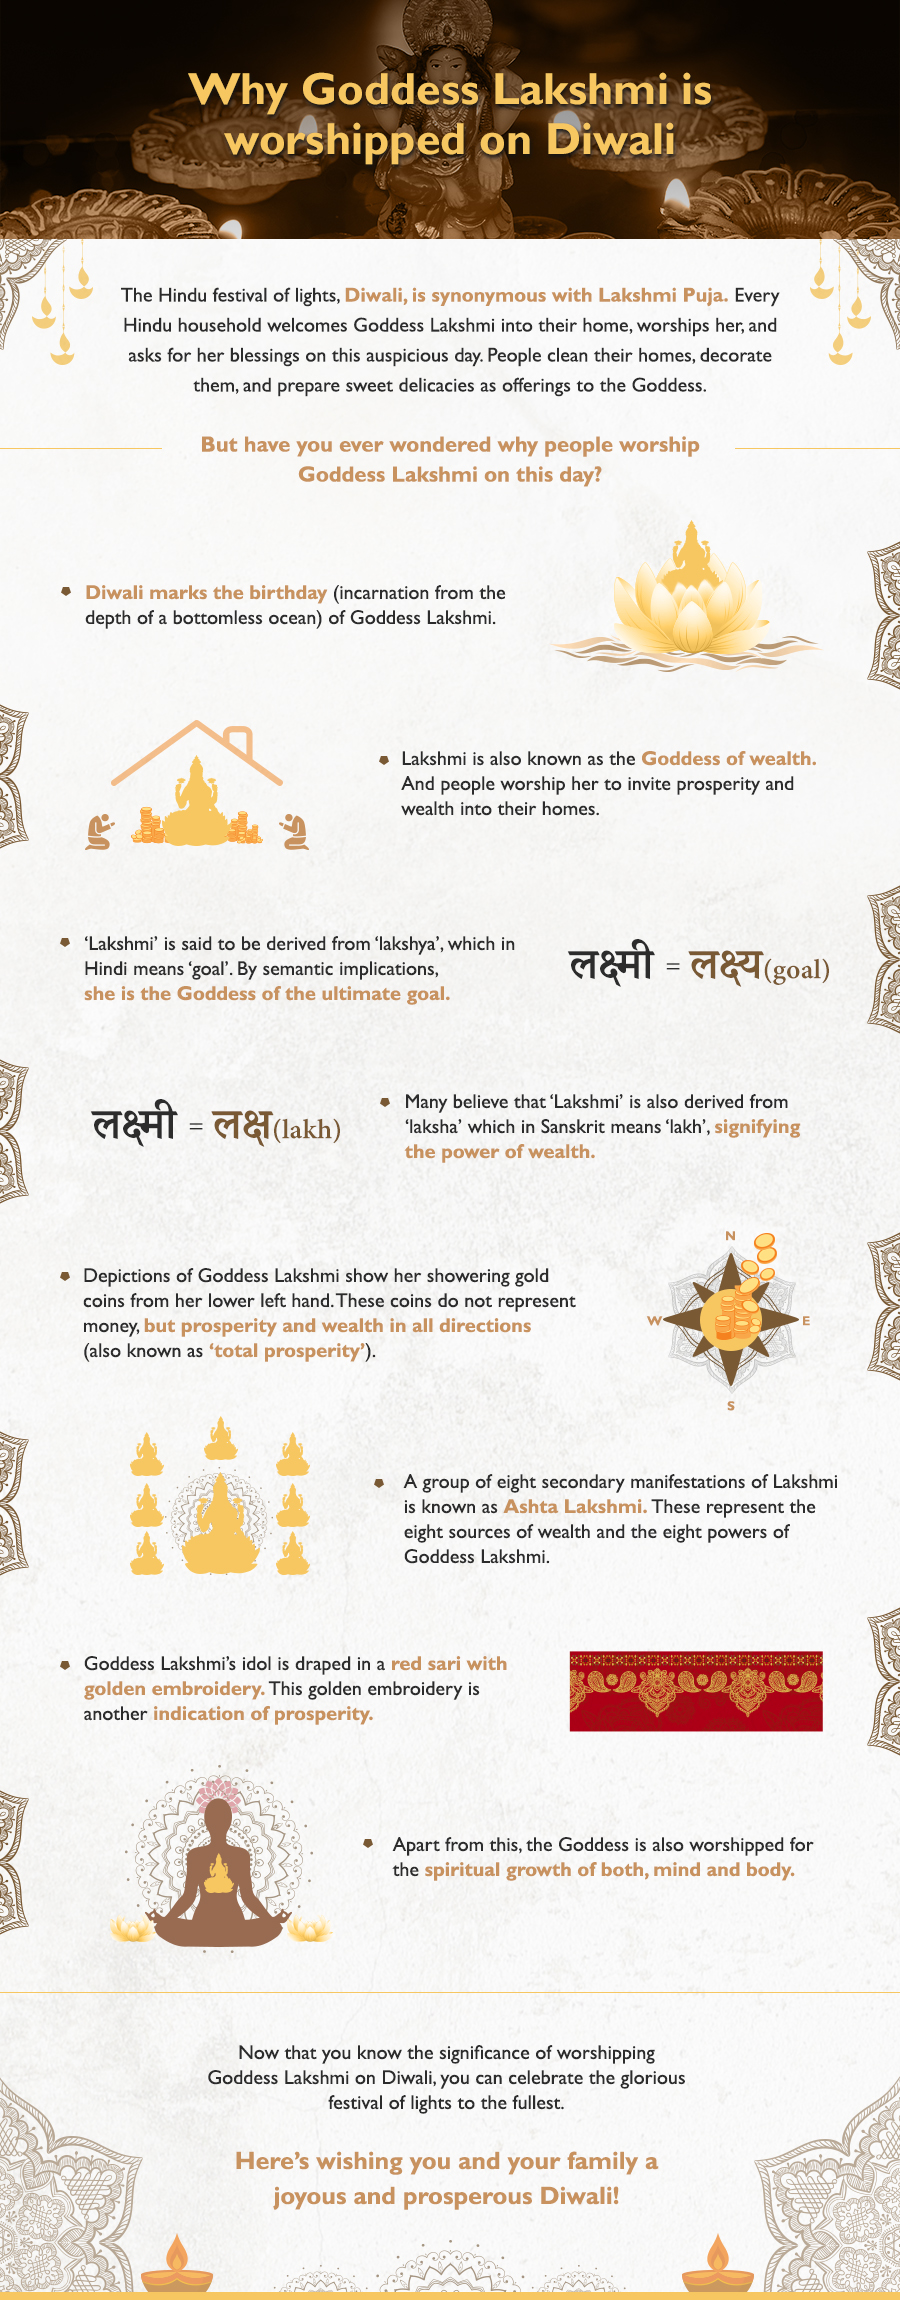 The Significance of Worshipping Goddess Lakshmi on Diwali